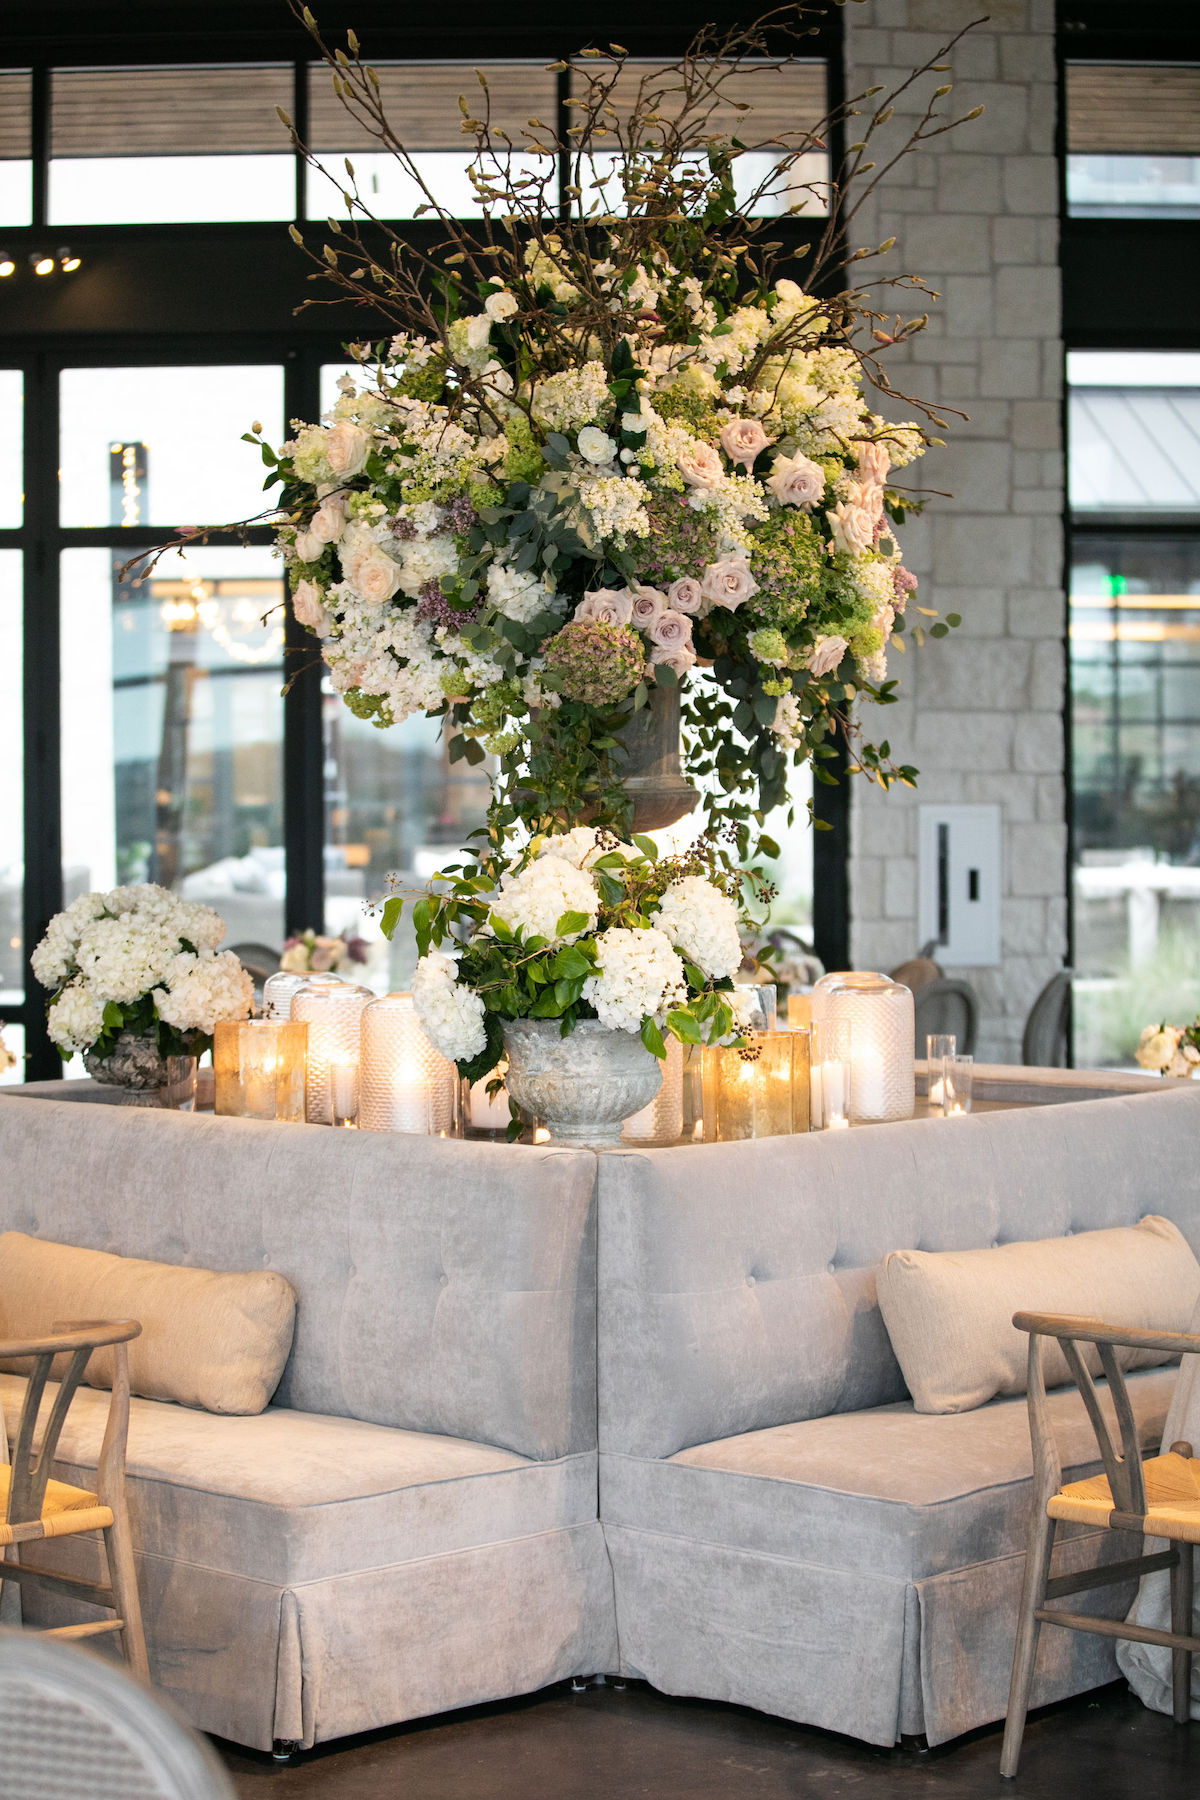 brighton keller wedding decor flowers